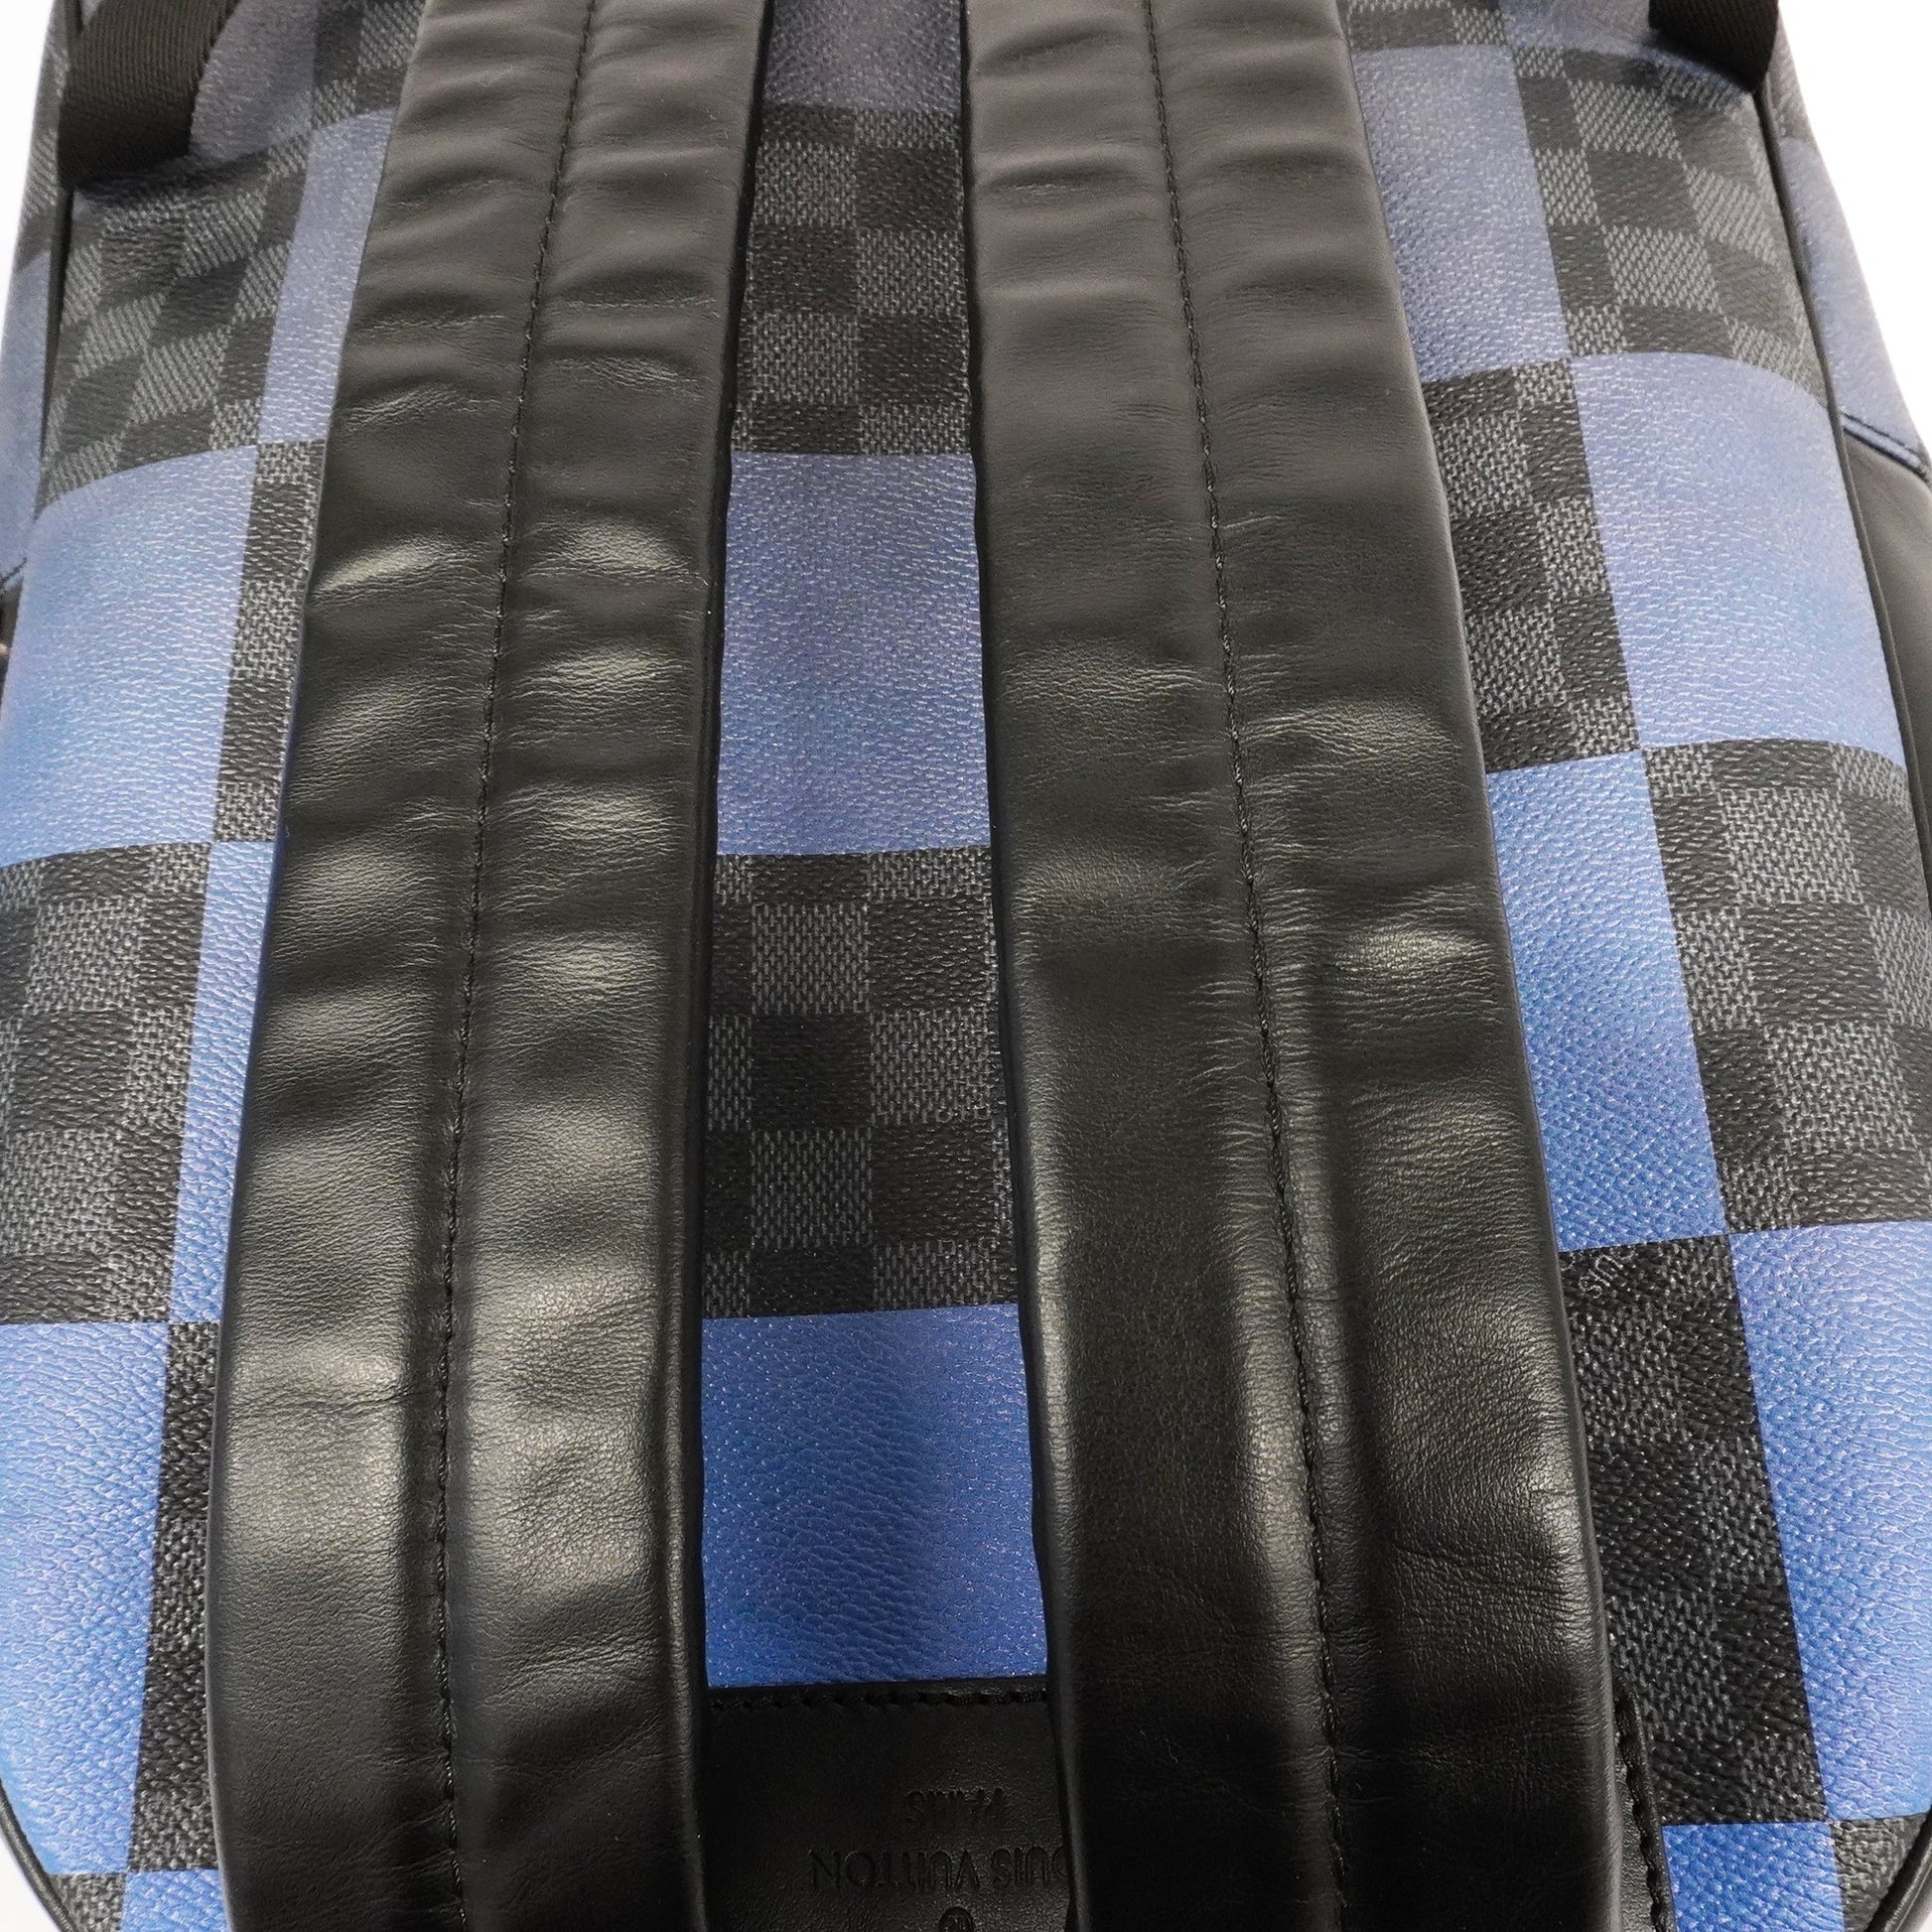 N40402 Louis Vuitton Blue Damier Graphite Giant Josh Backpack